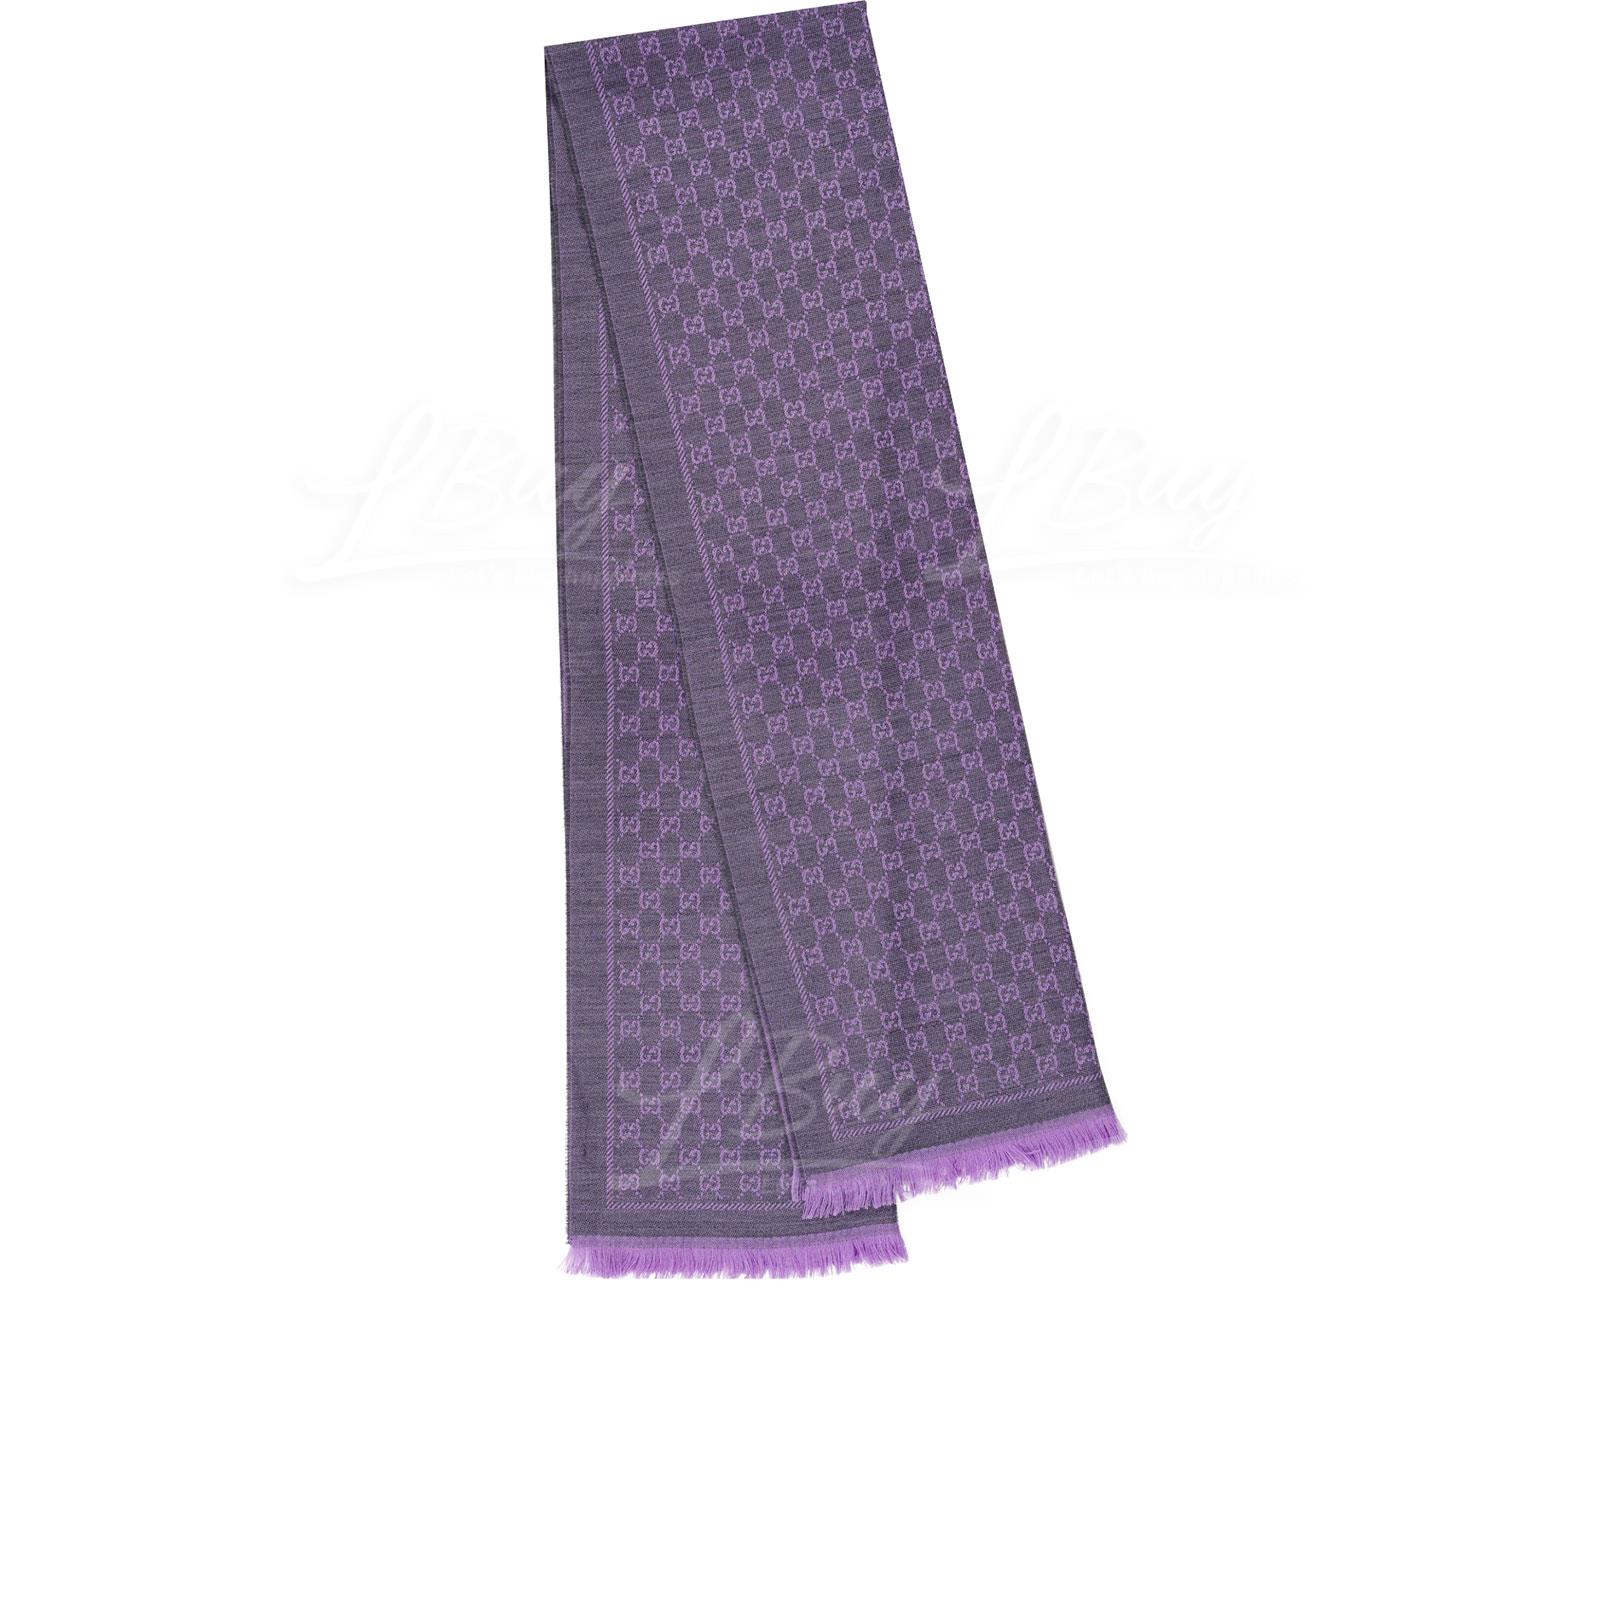 Gucci GG logo Purple Wool Scarf